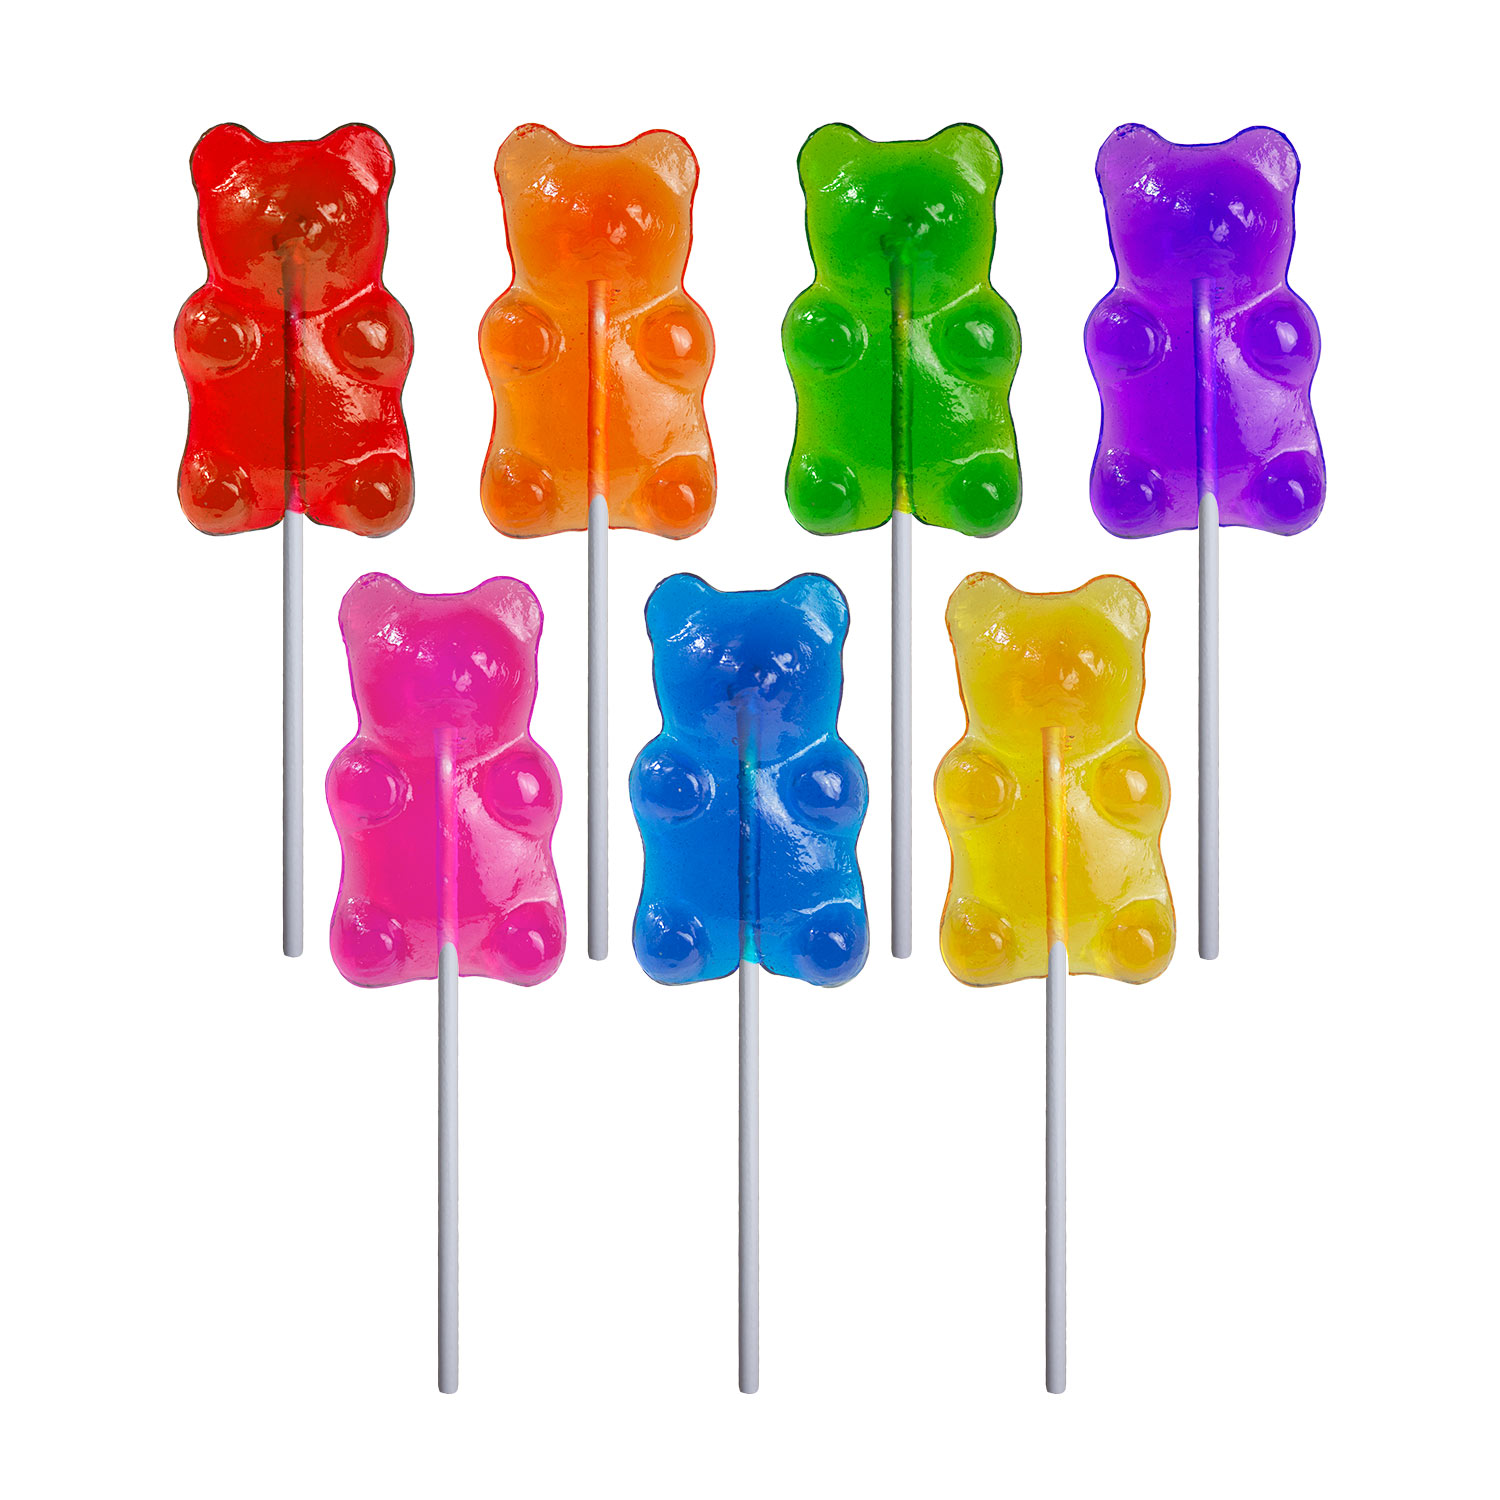 Sugar Bear Lollipops by Melville Candy